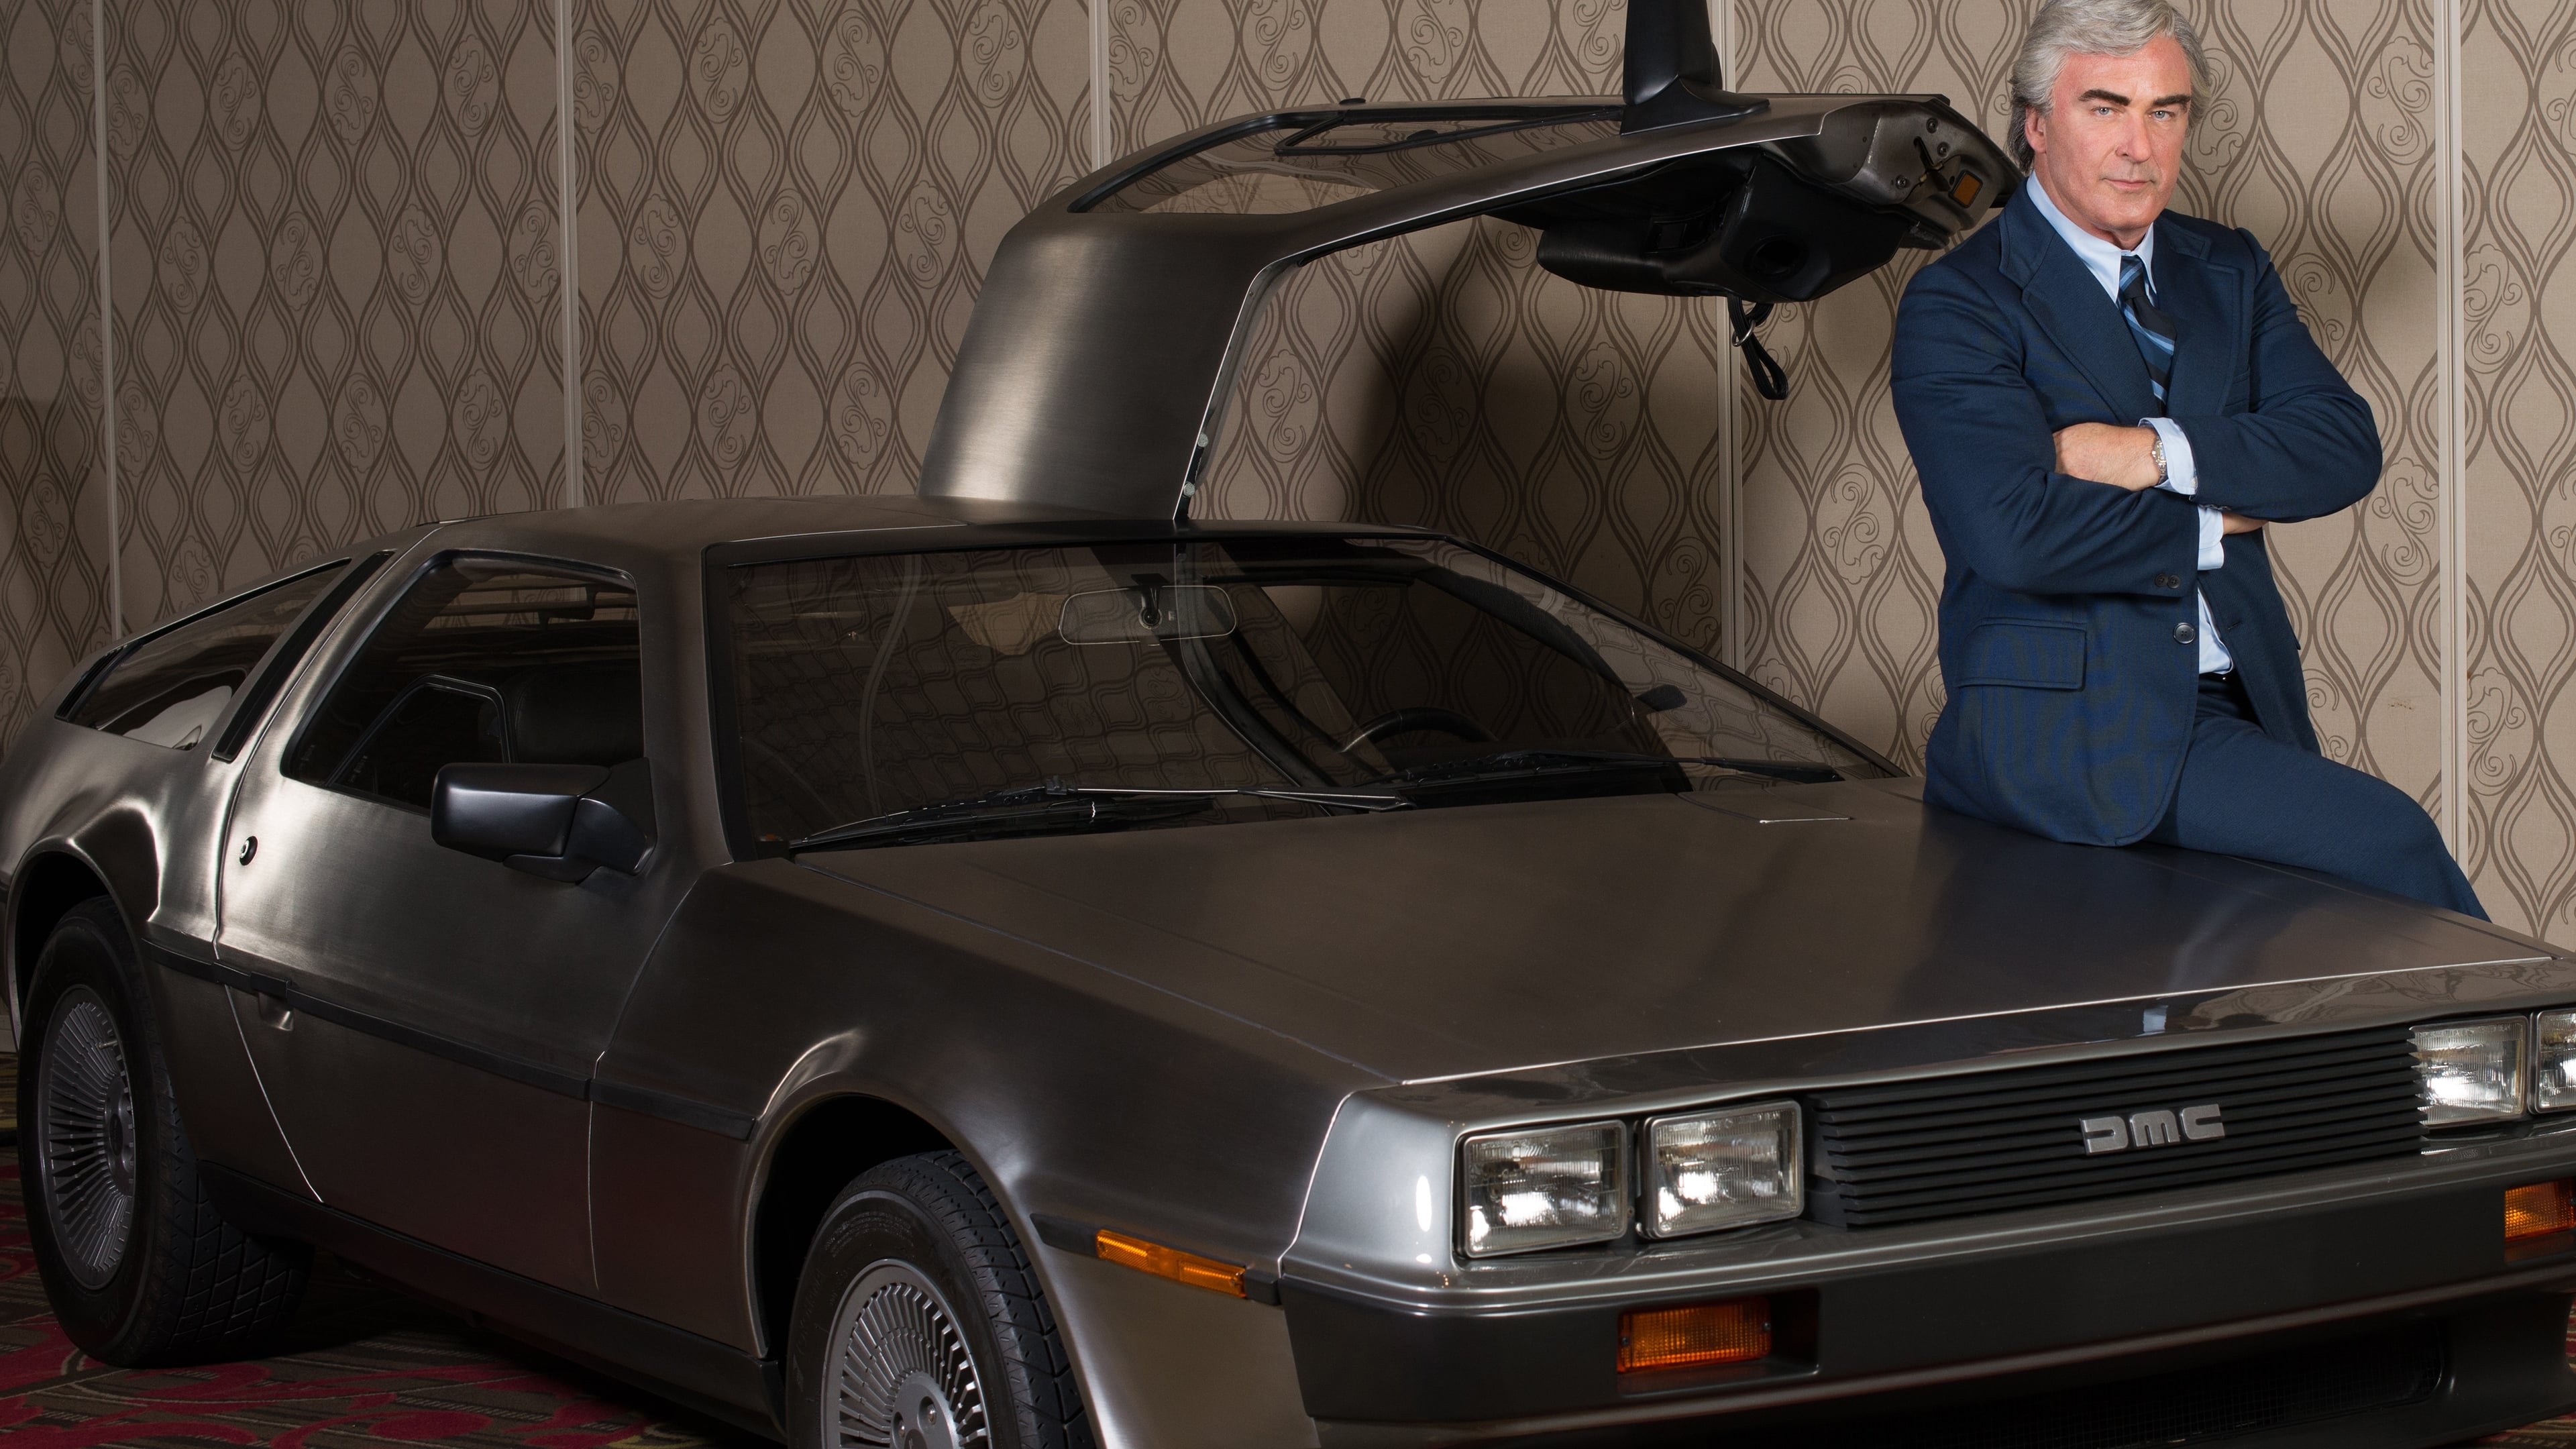 Framing John DeLorean 2019 123movies